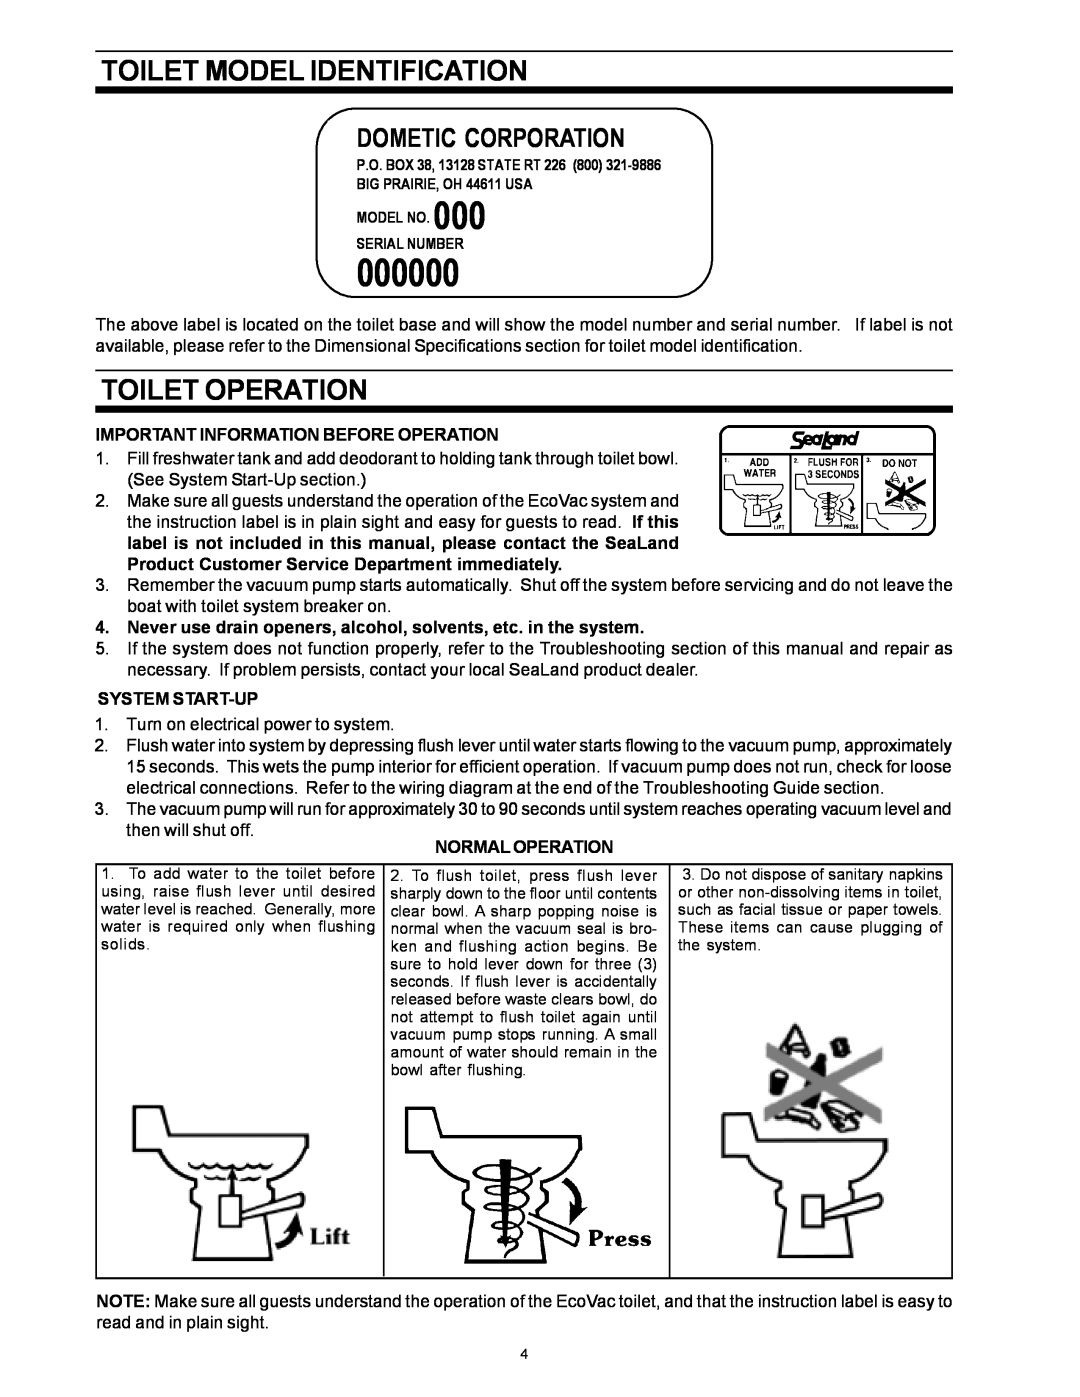 Dometic SANITATION SYSTEM Toilet Model Identification, Toilet Operation, 000000, Dometic Corporation, System Start-Up 